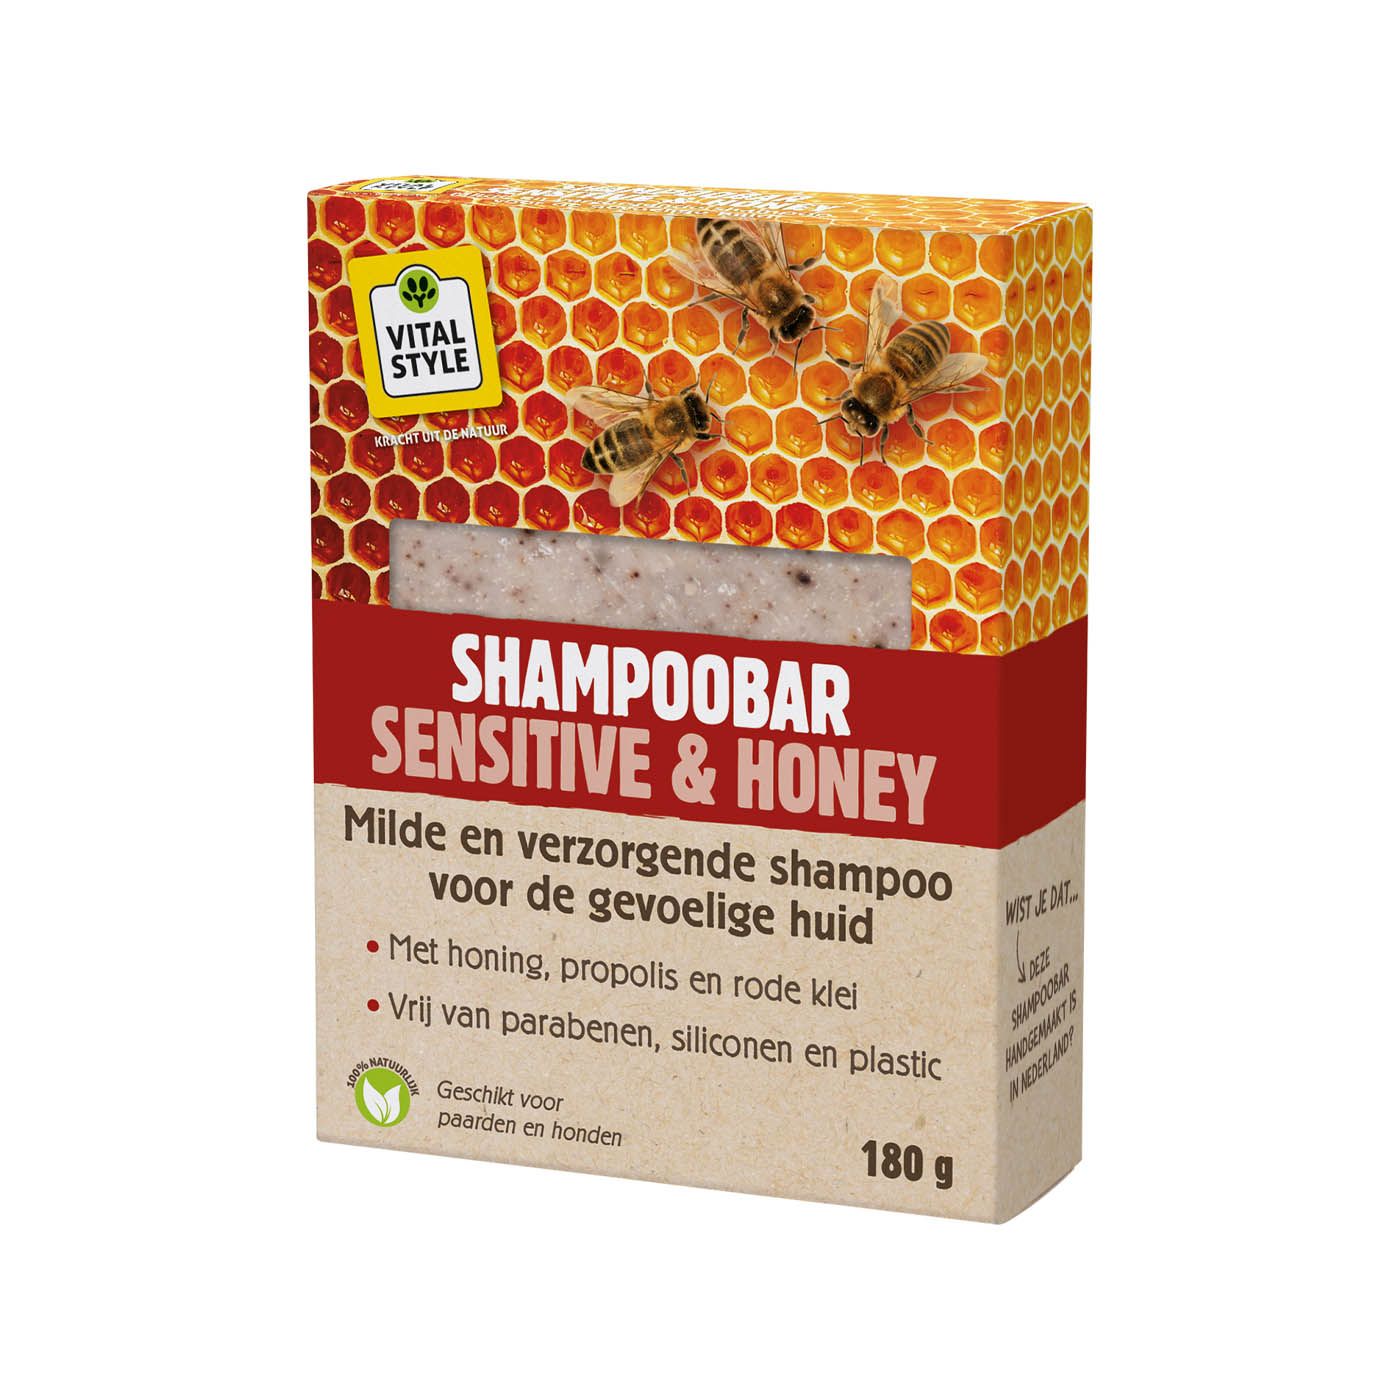 Shampoobar Sensitive & Honey 